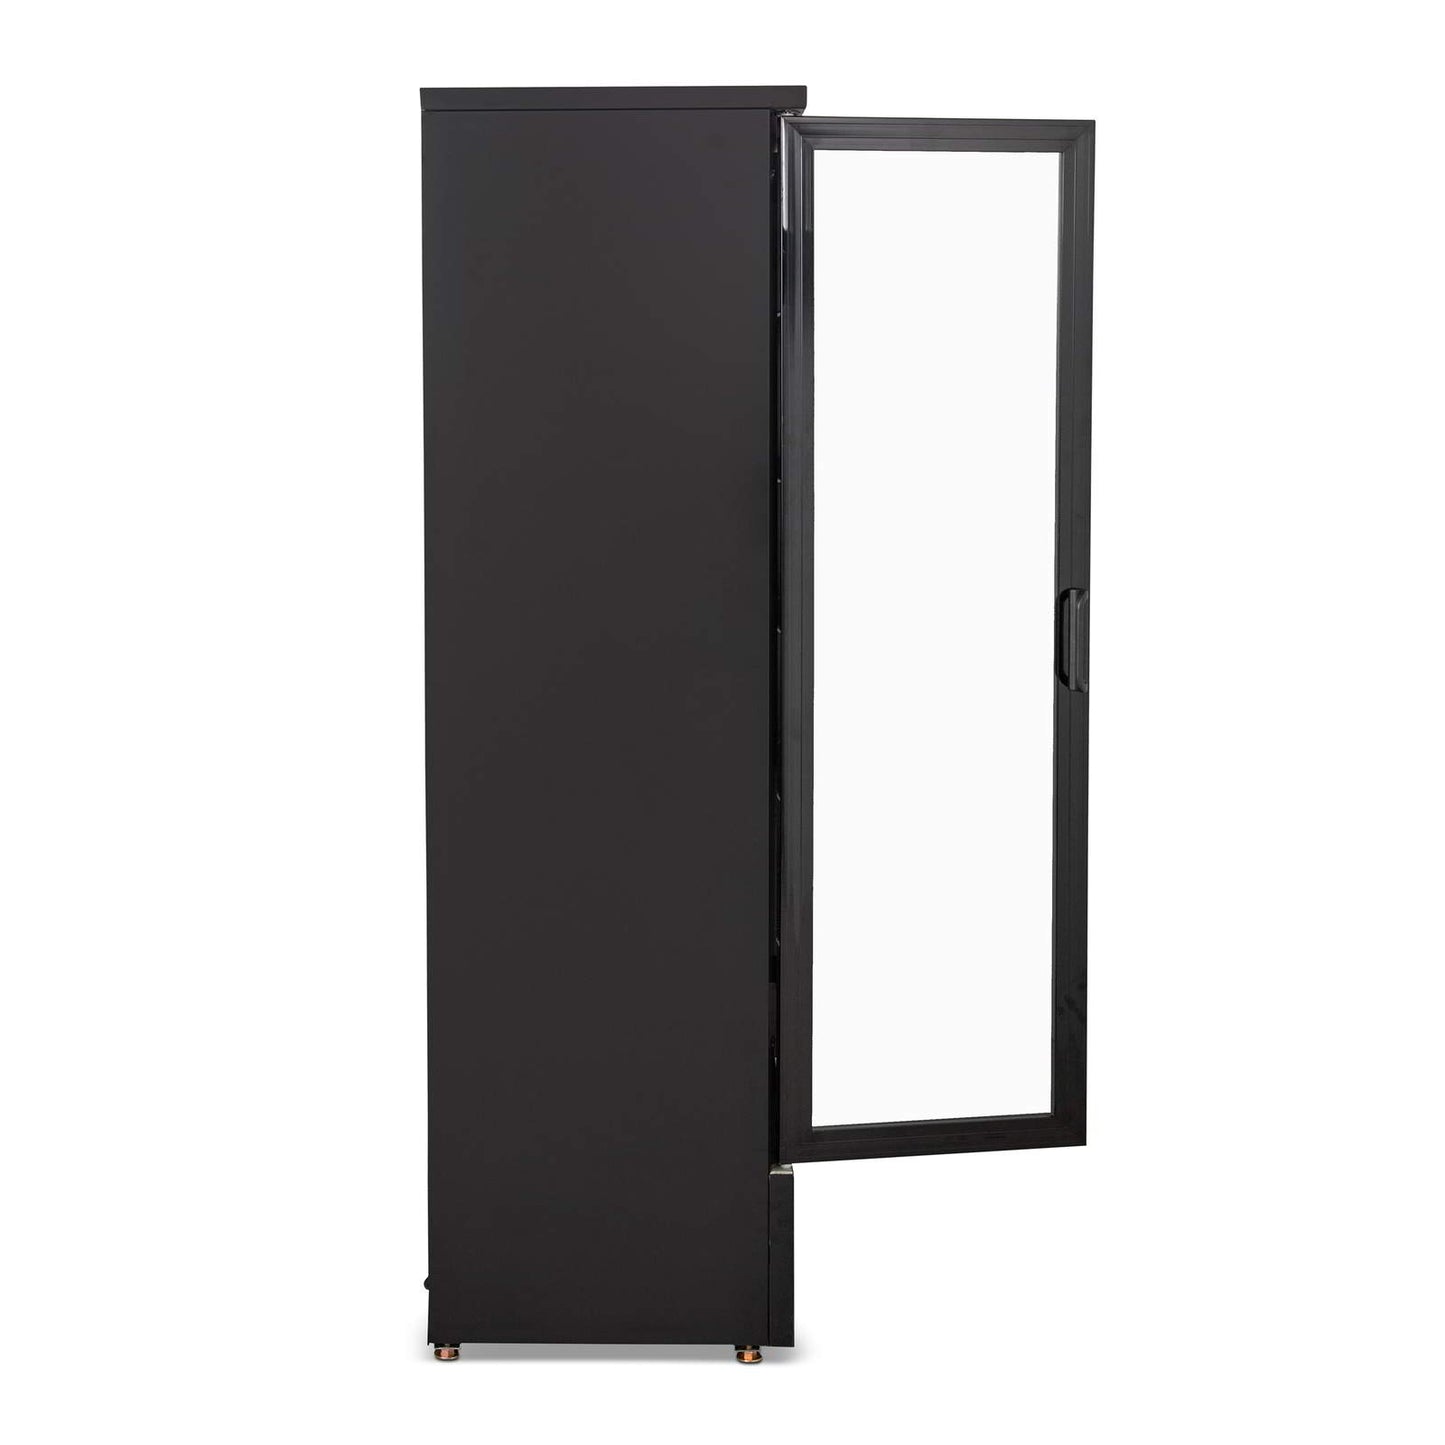 477L Upright Double Glass Door Display / Backbar Fridge - Black